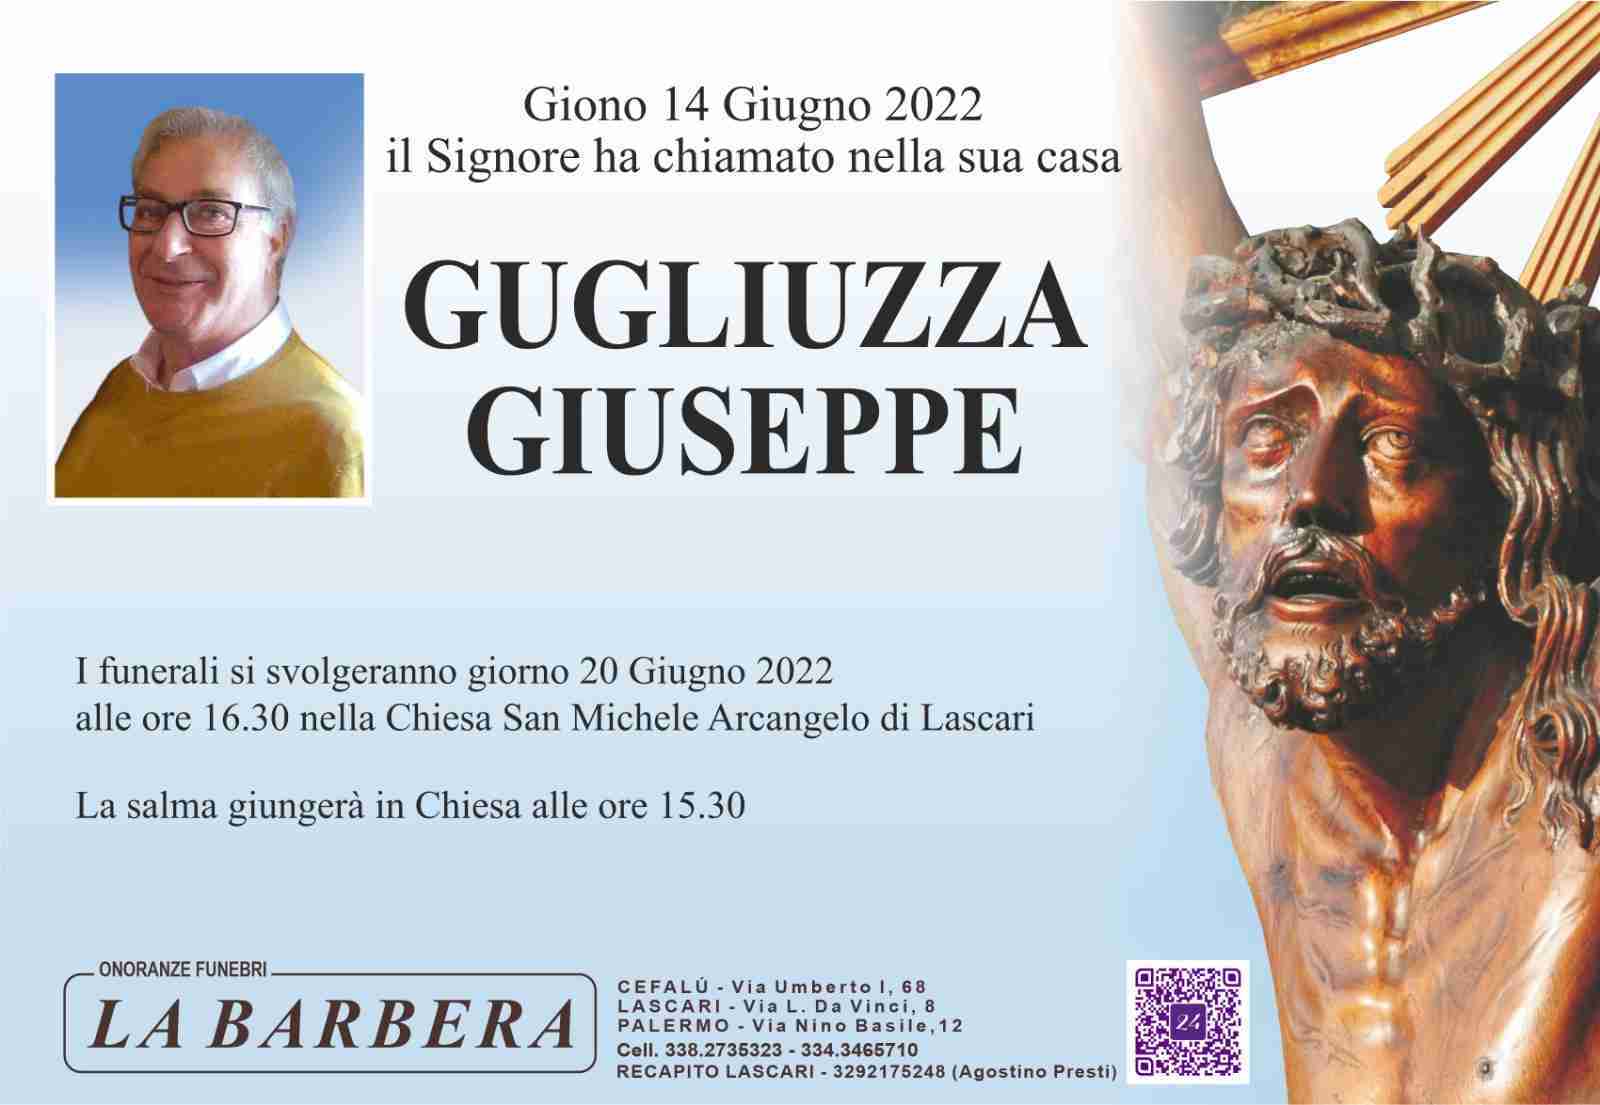 Giuseppe Gugliuzza